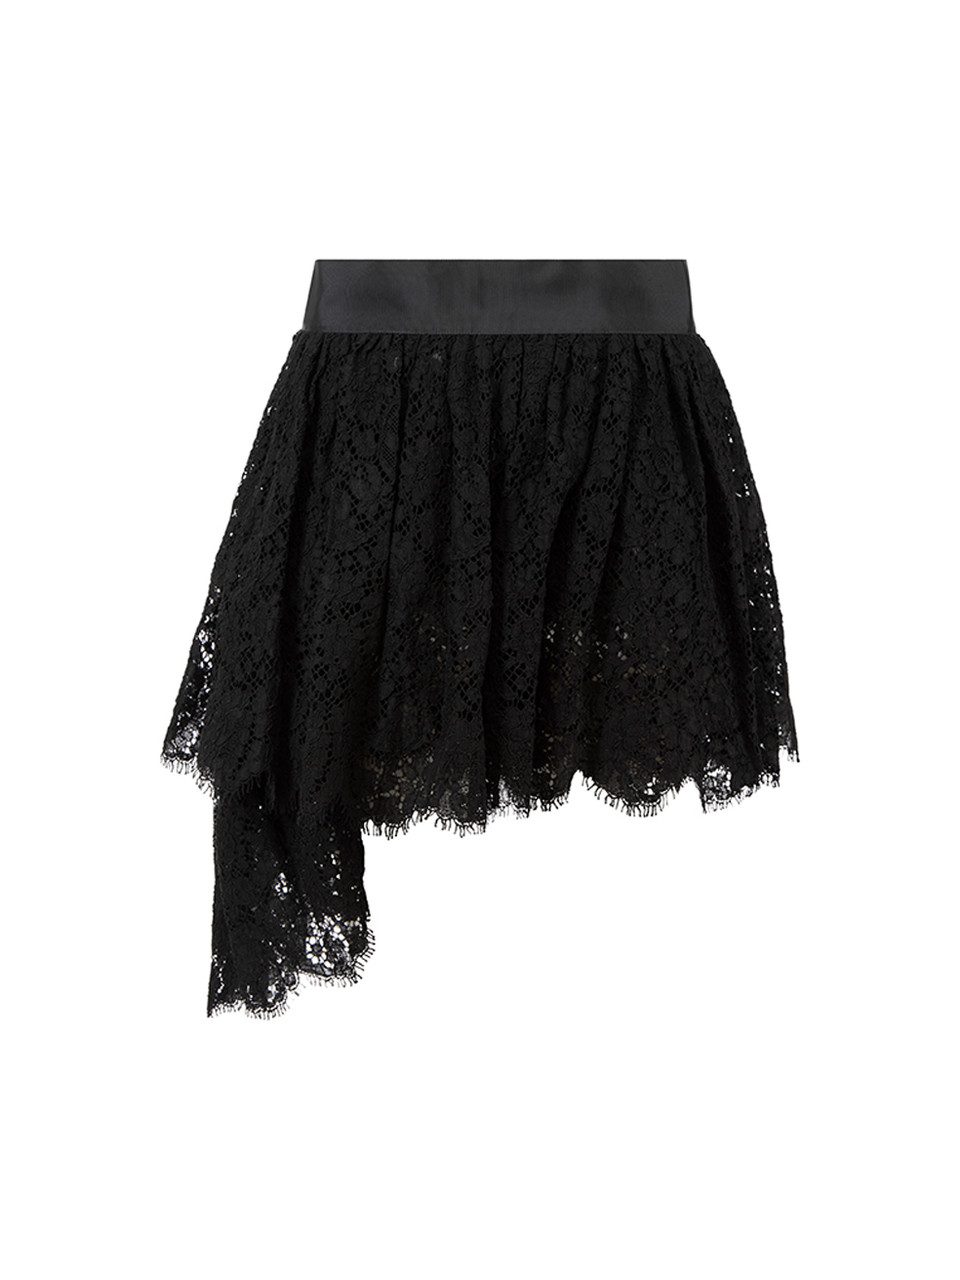 Chanel Black Lace Layered Shorts